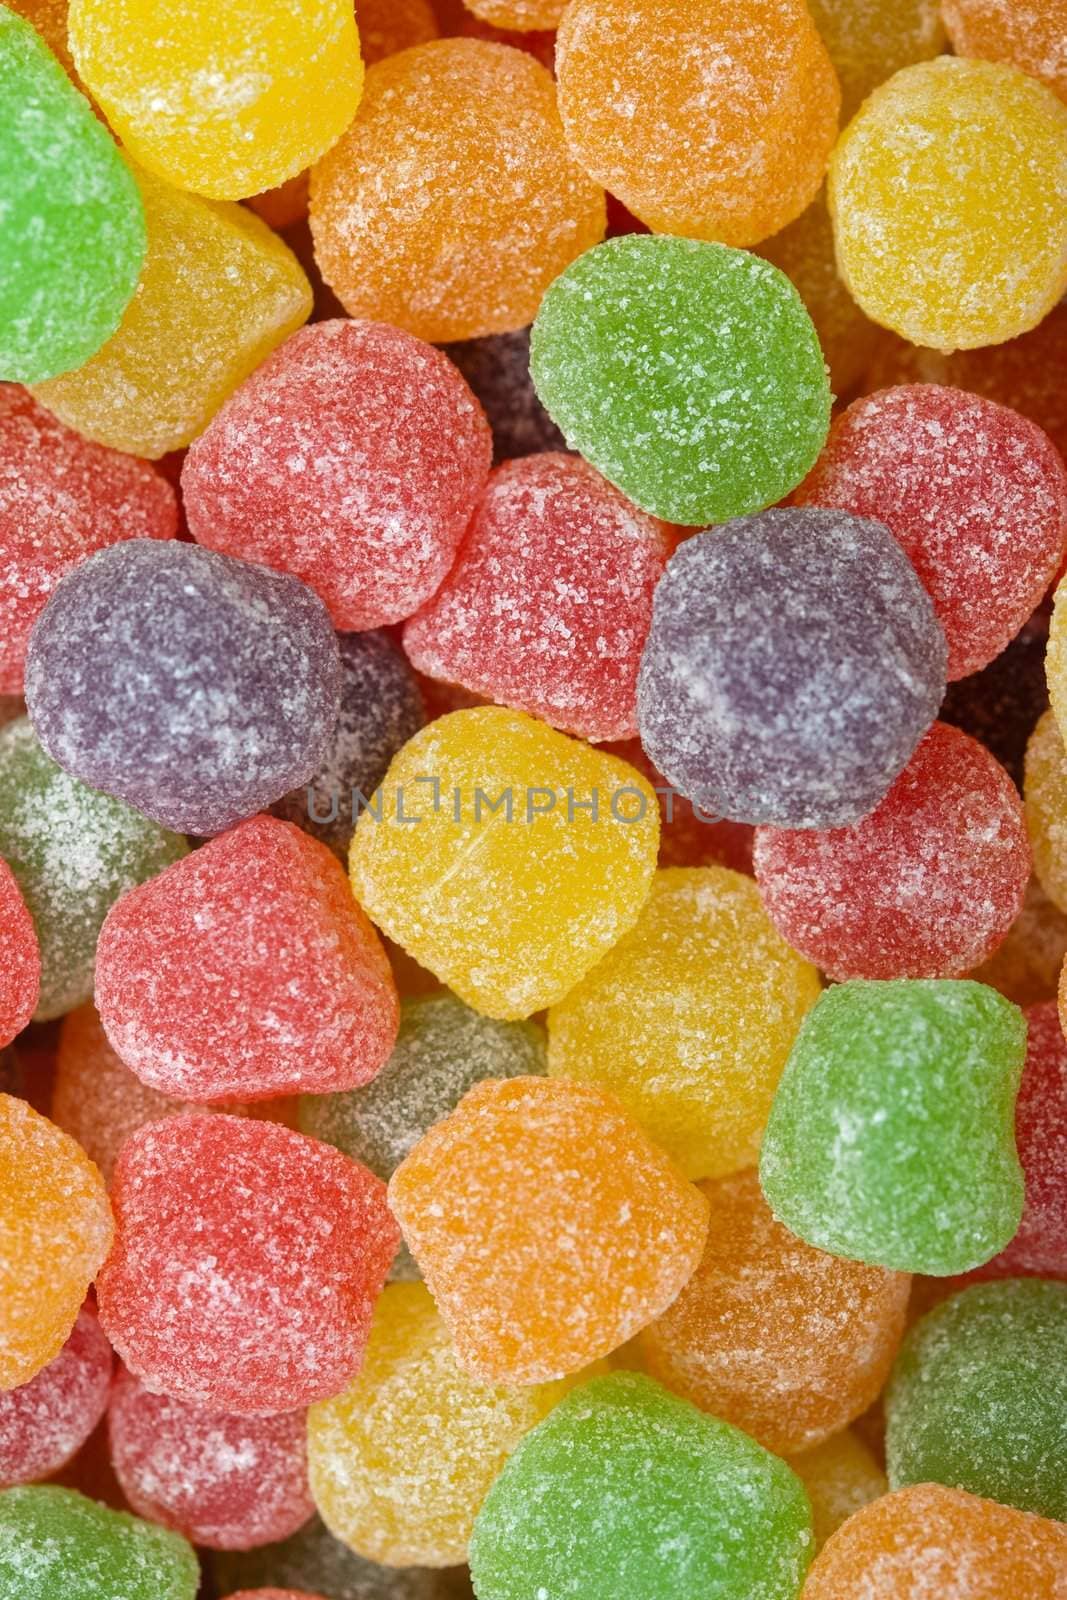 Colorful Candy by Daniel_Wiedemann